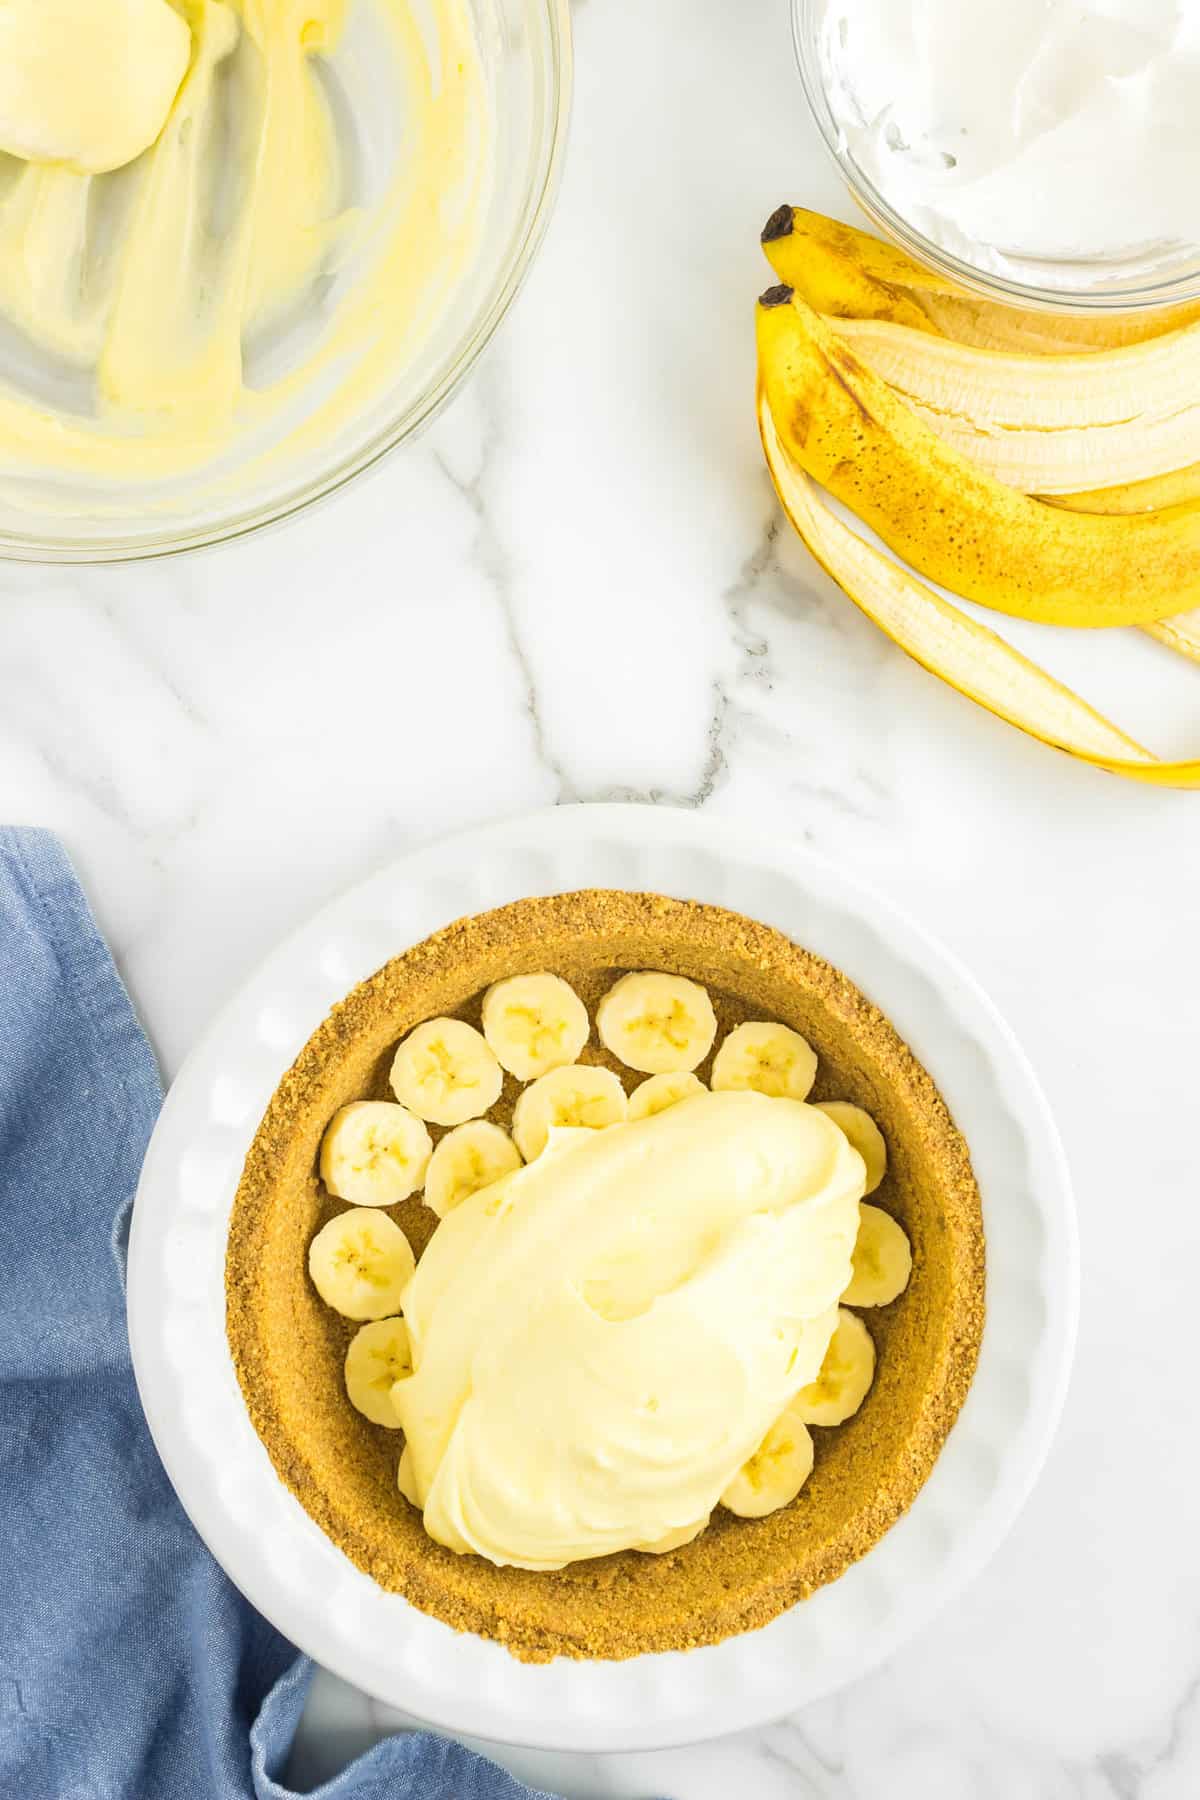 Adding Pie Filling to Banana-Lined Crust for No Bake Banana Cream PIe Recipe